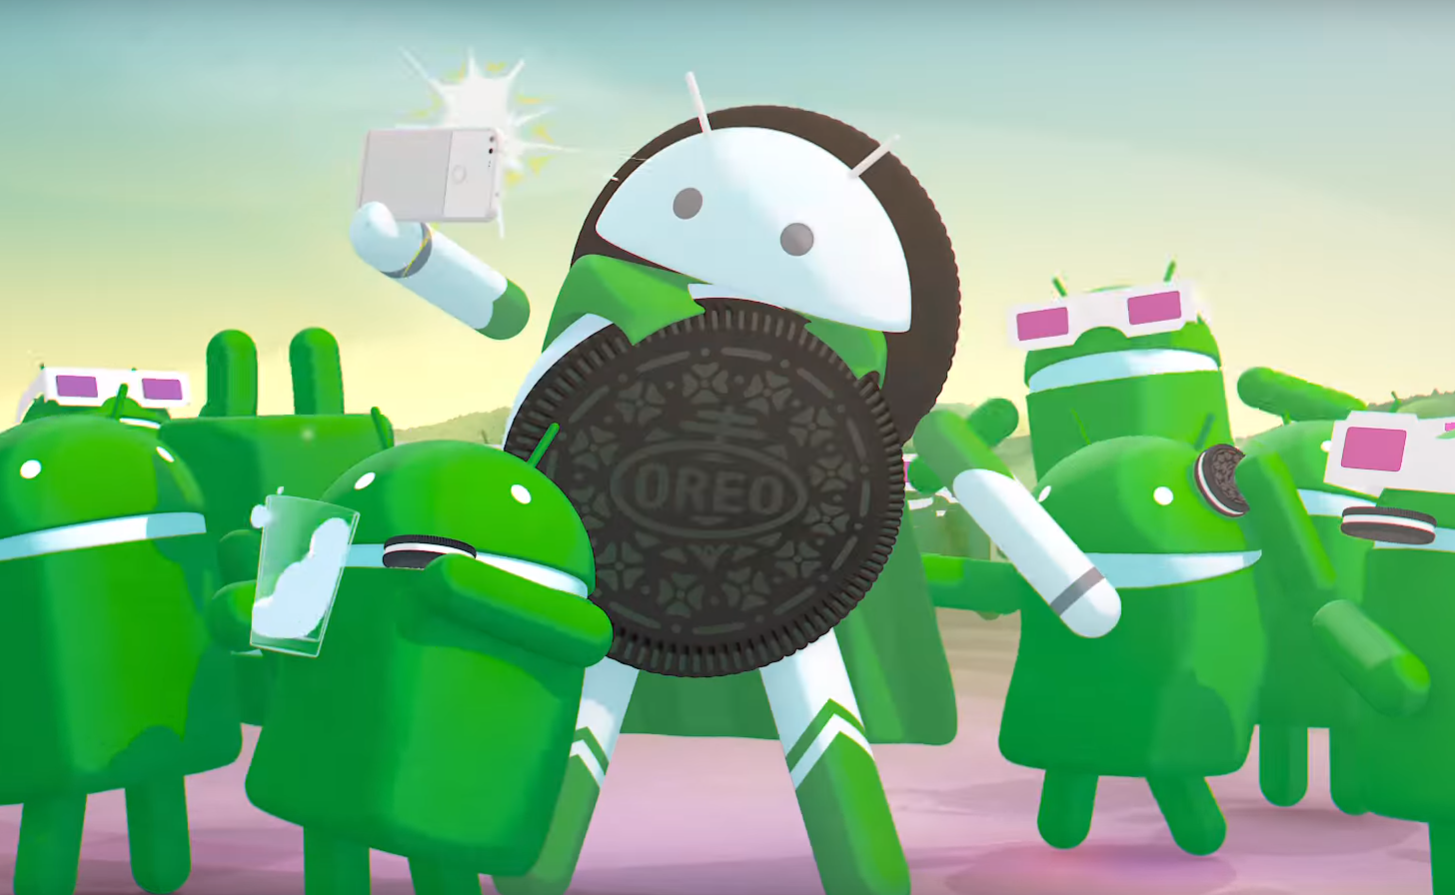 Everything андроид. Android Oreo. Андроид 8.1. Андроид 008. Android 8.1 Oreo.